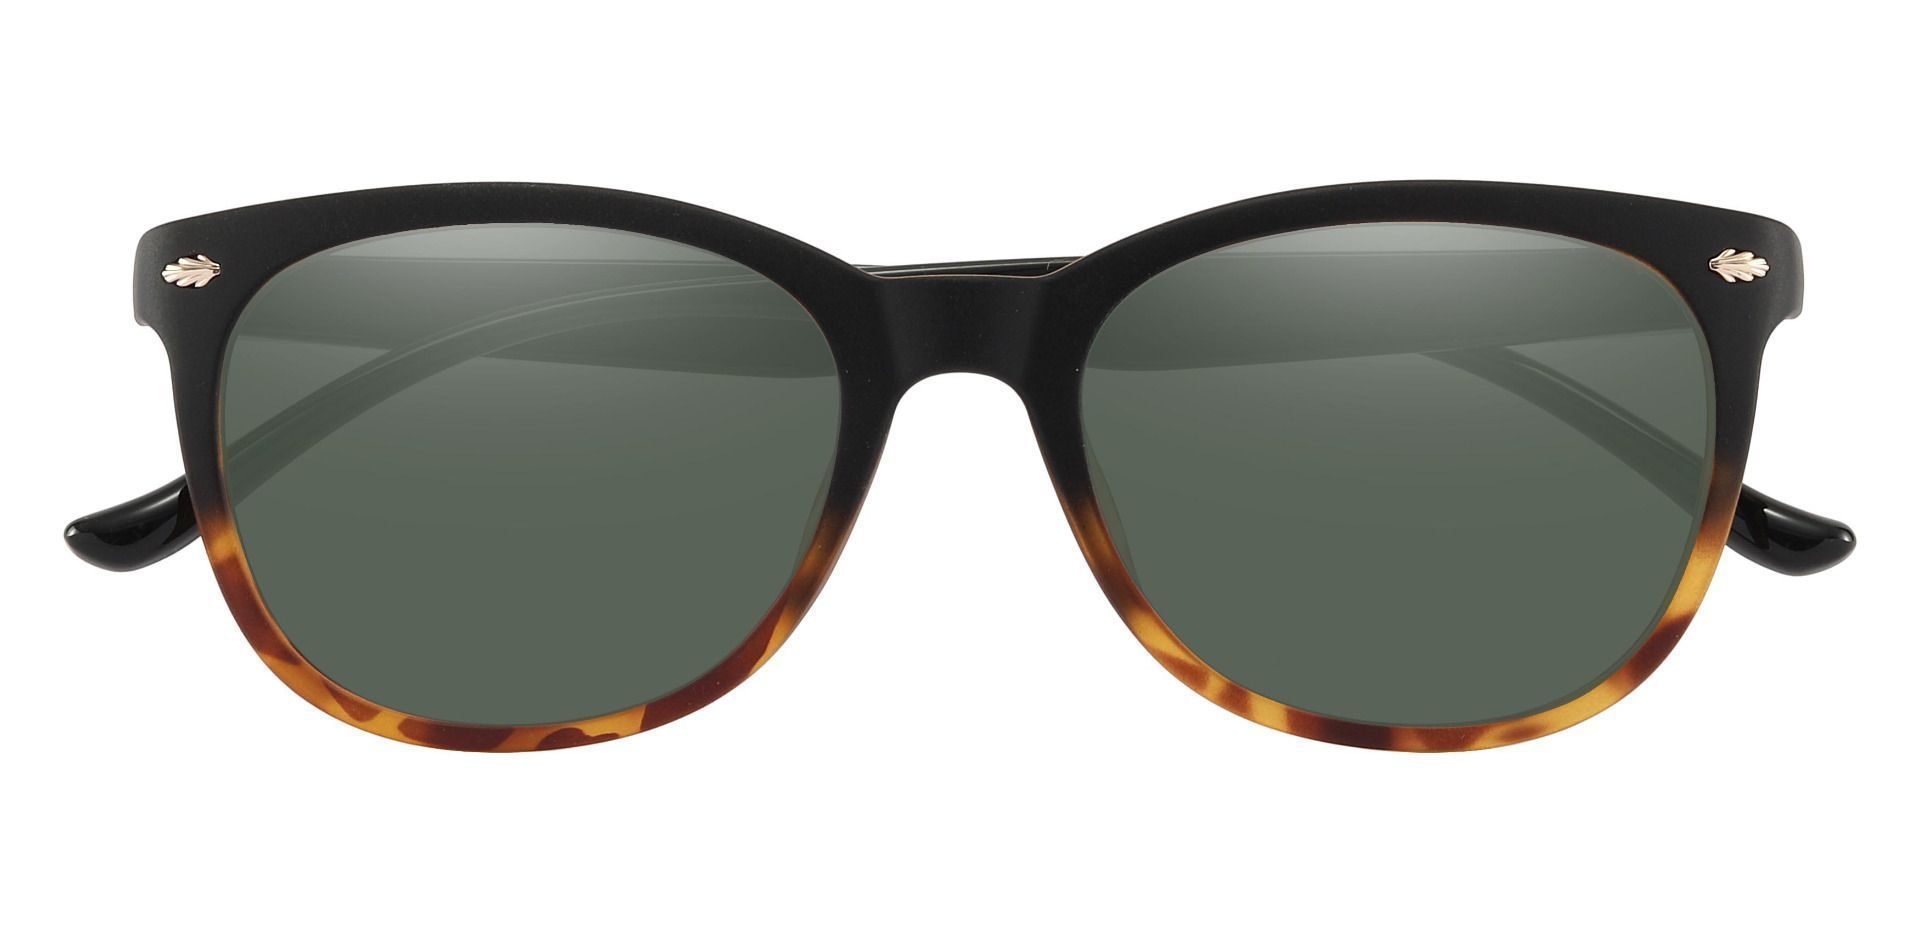 Pavilion Square Reading Sunglasses - Black Frame With Green Lenses